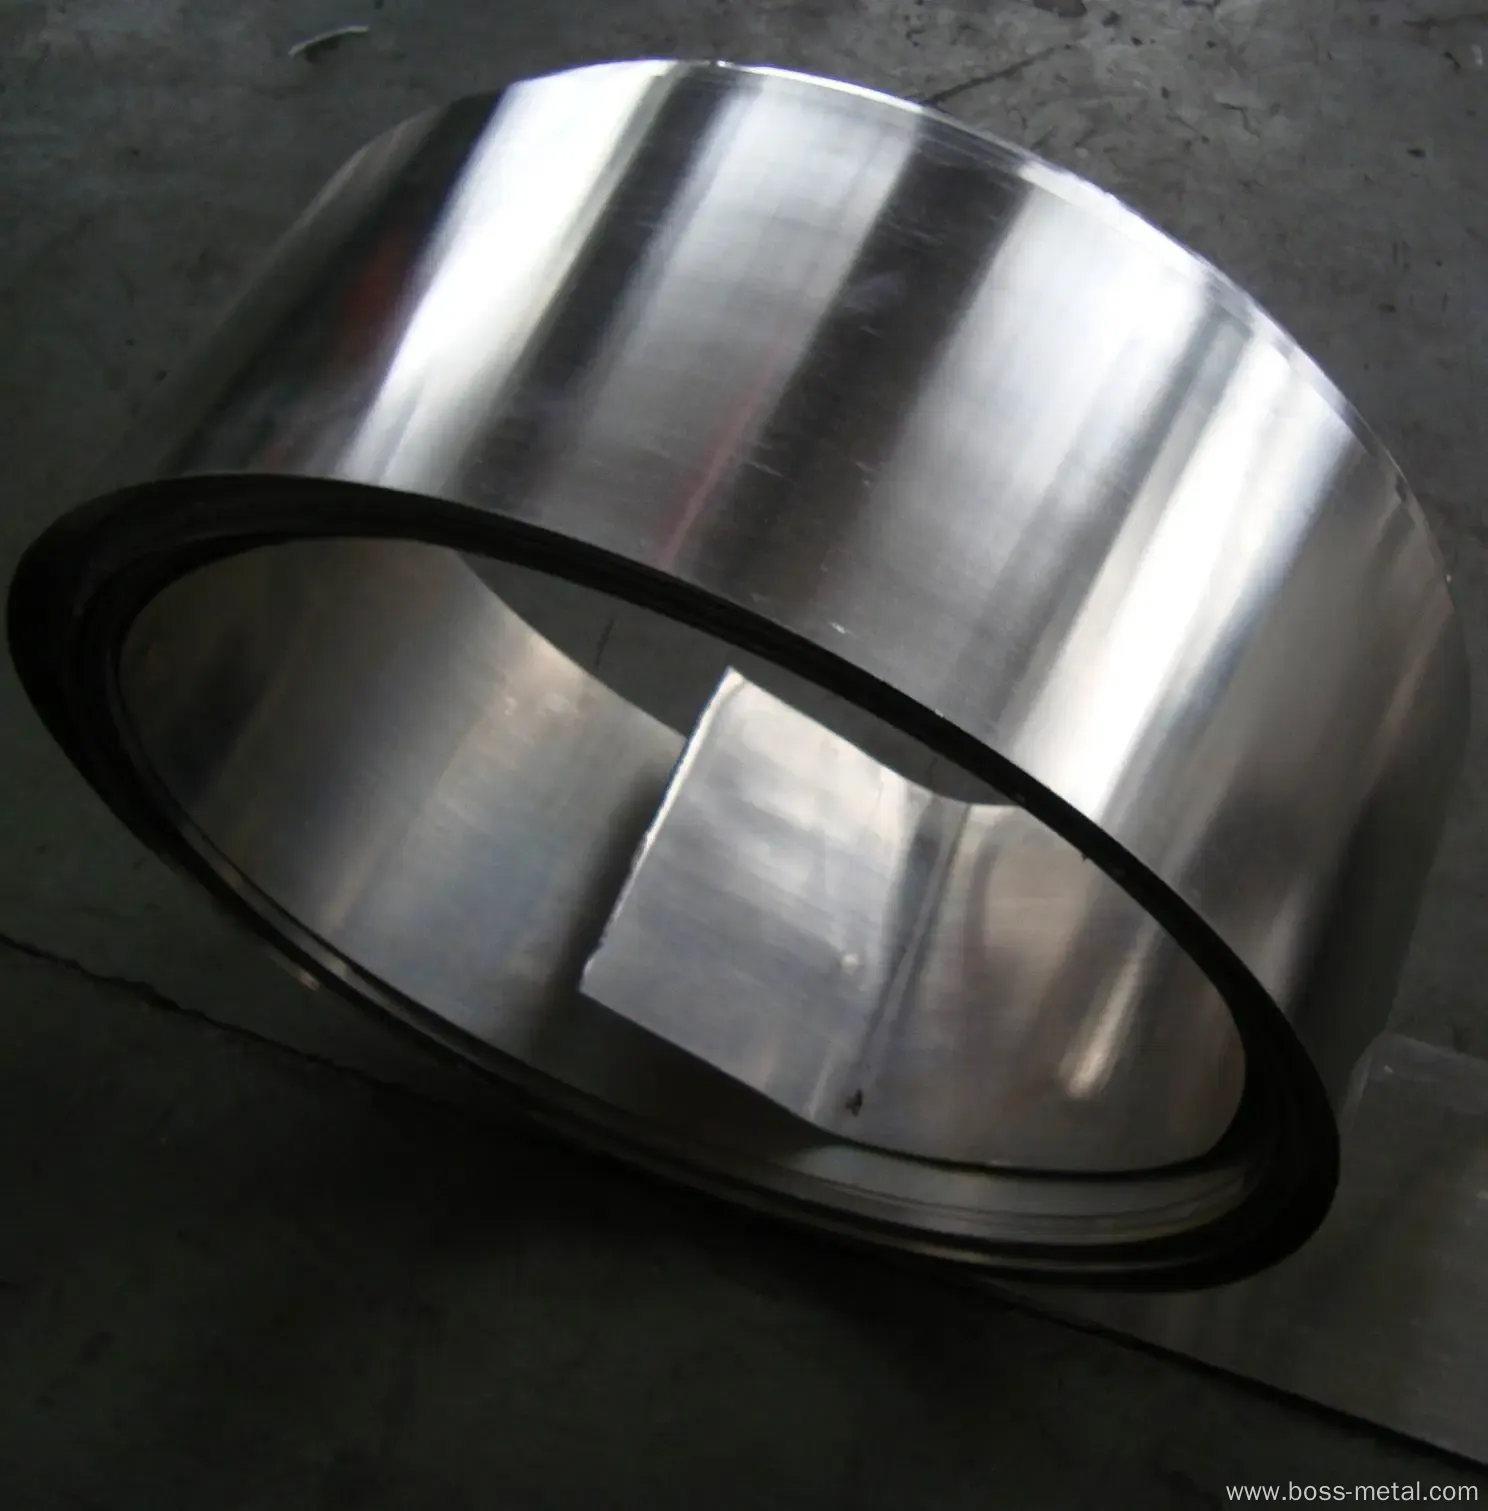 Kitchenware steel sink metal foil strip